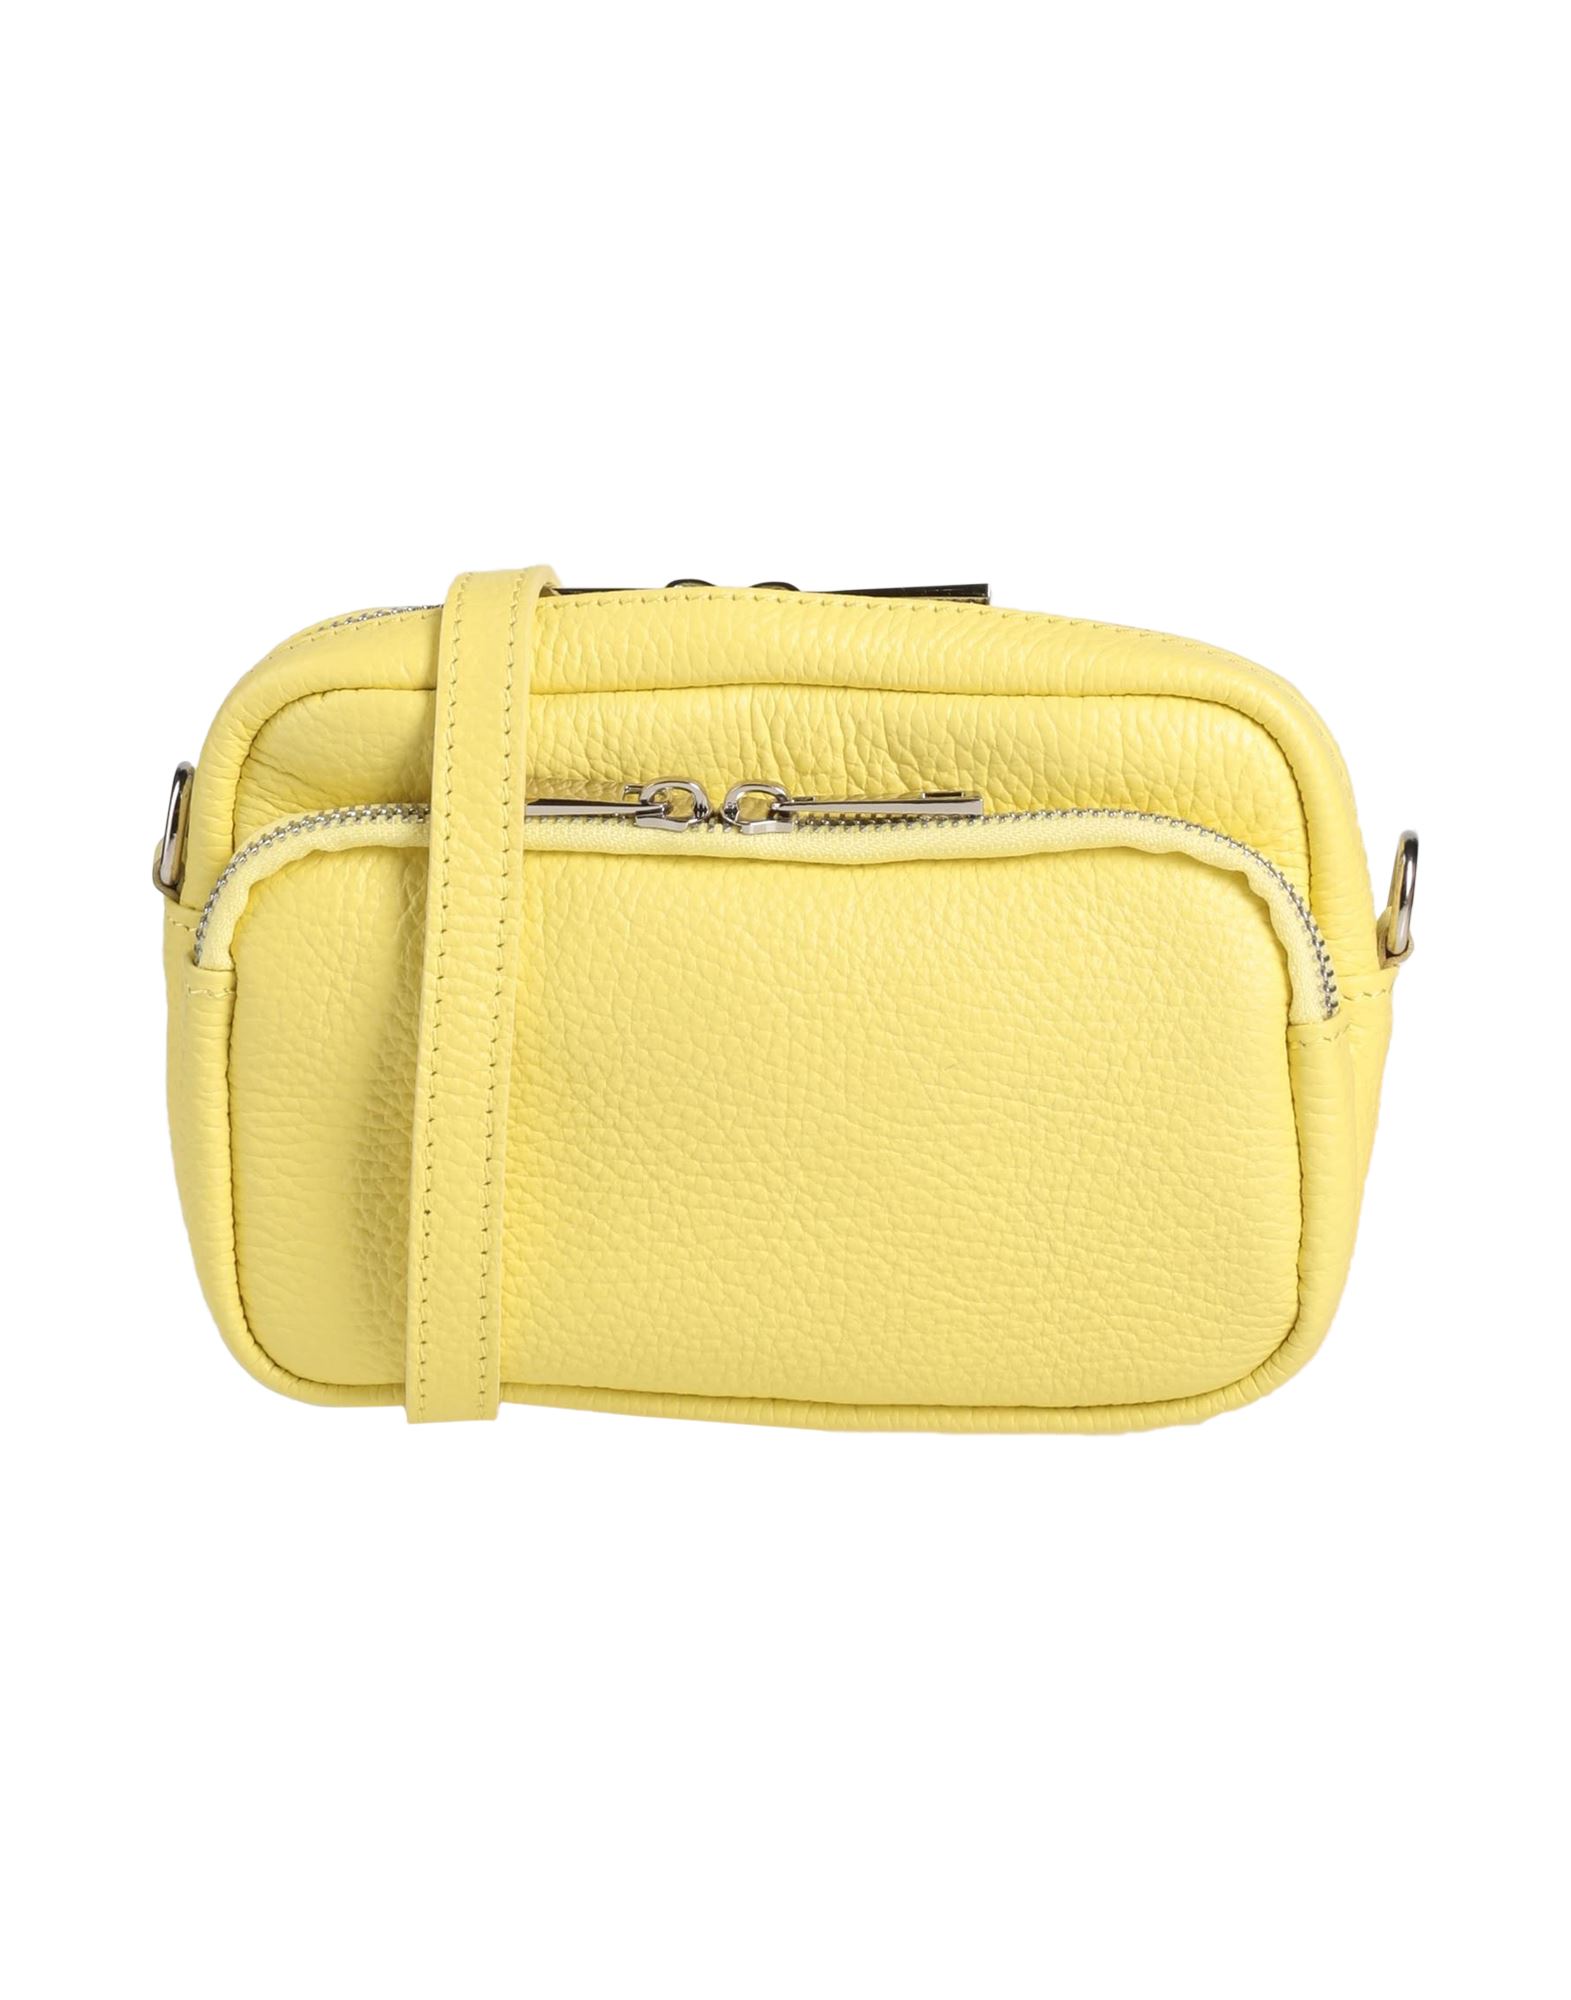 Ab Asia Bellucci Handbags In Light Yellow